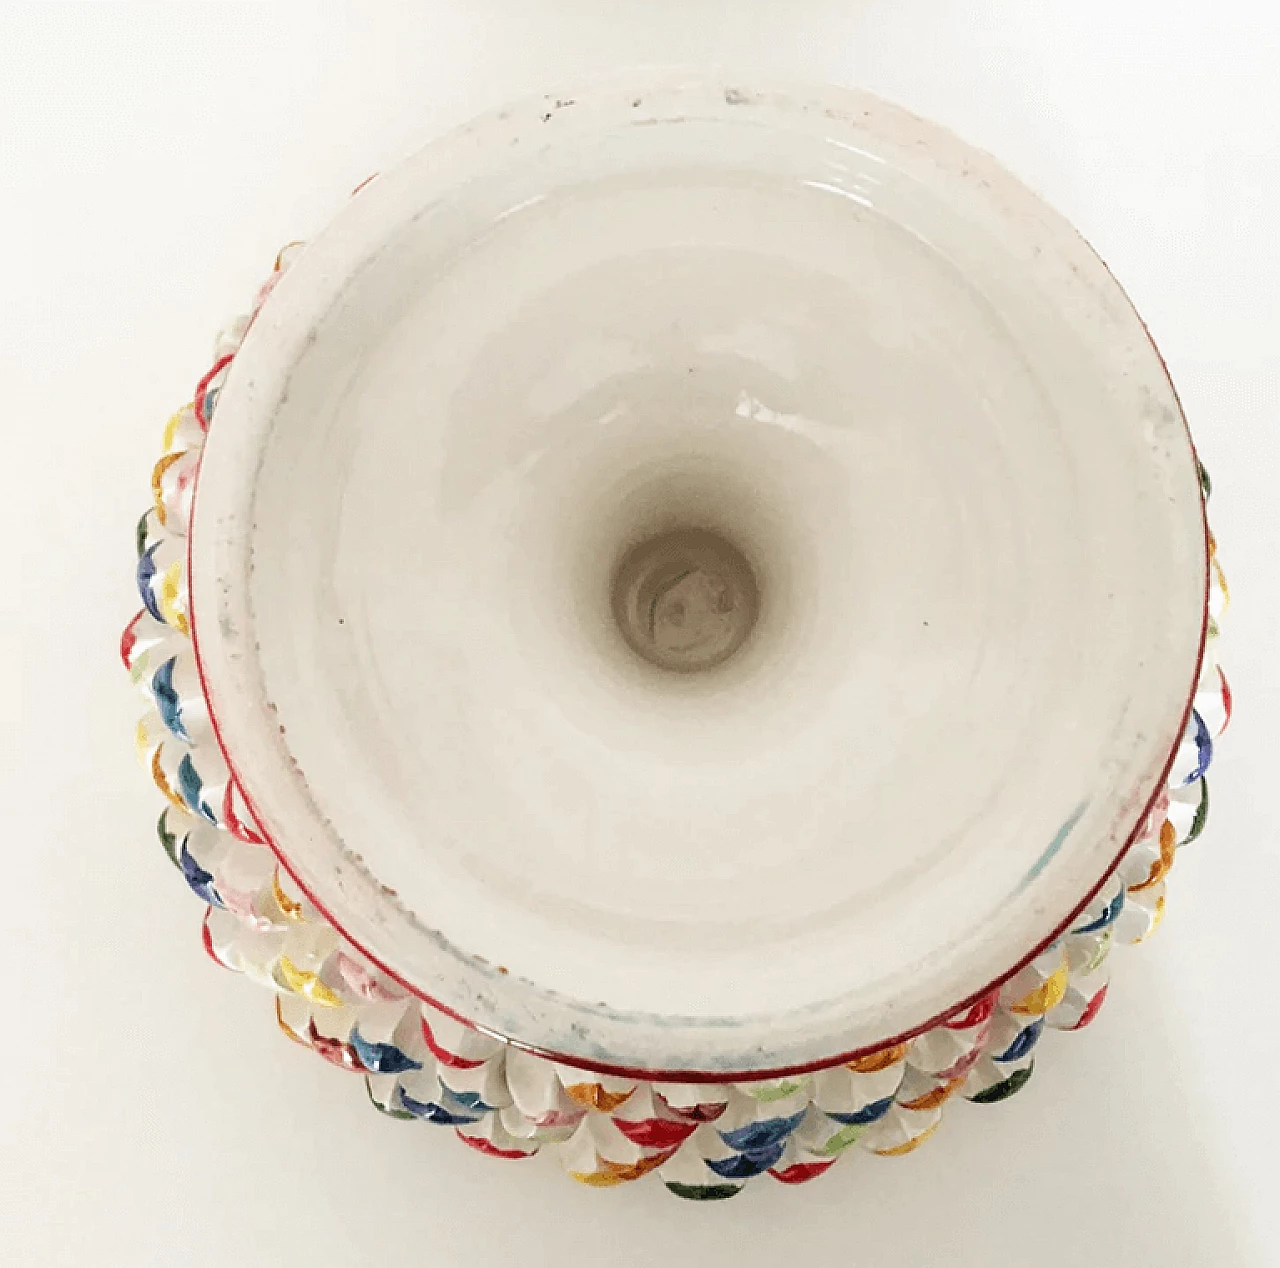 Caltagirone ceramic riser, white with colored grains 3